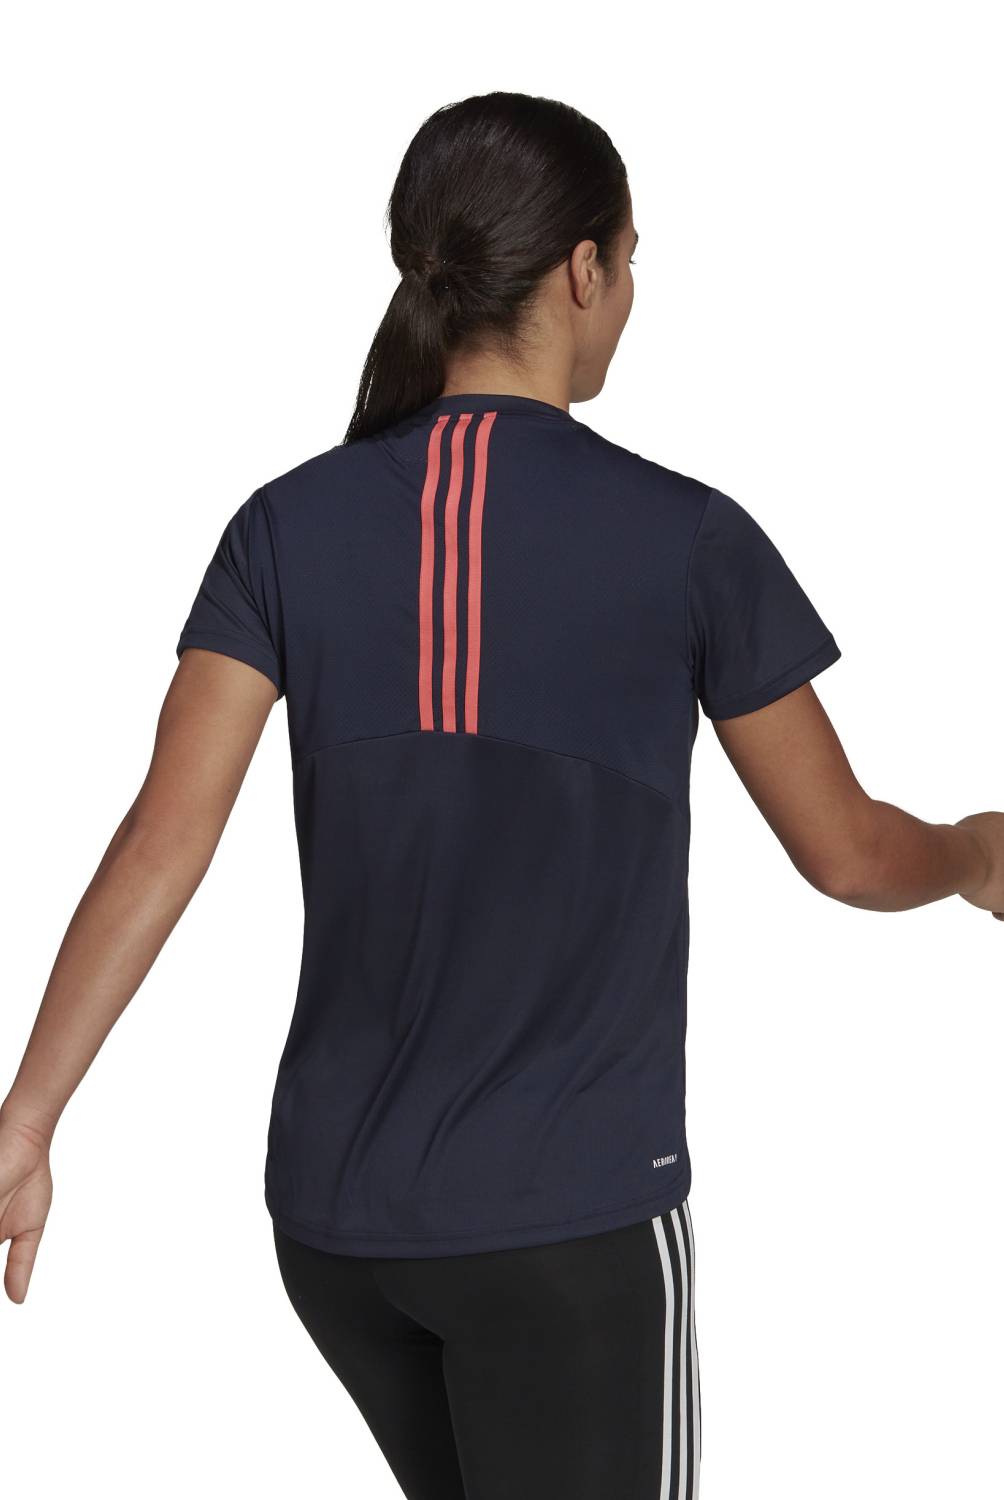 ADIDAS - Adidas Polera Deportiva 3 Stripes Mujer